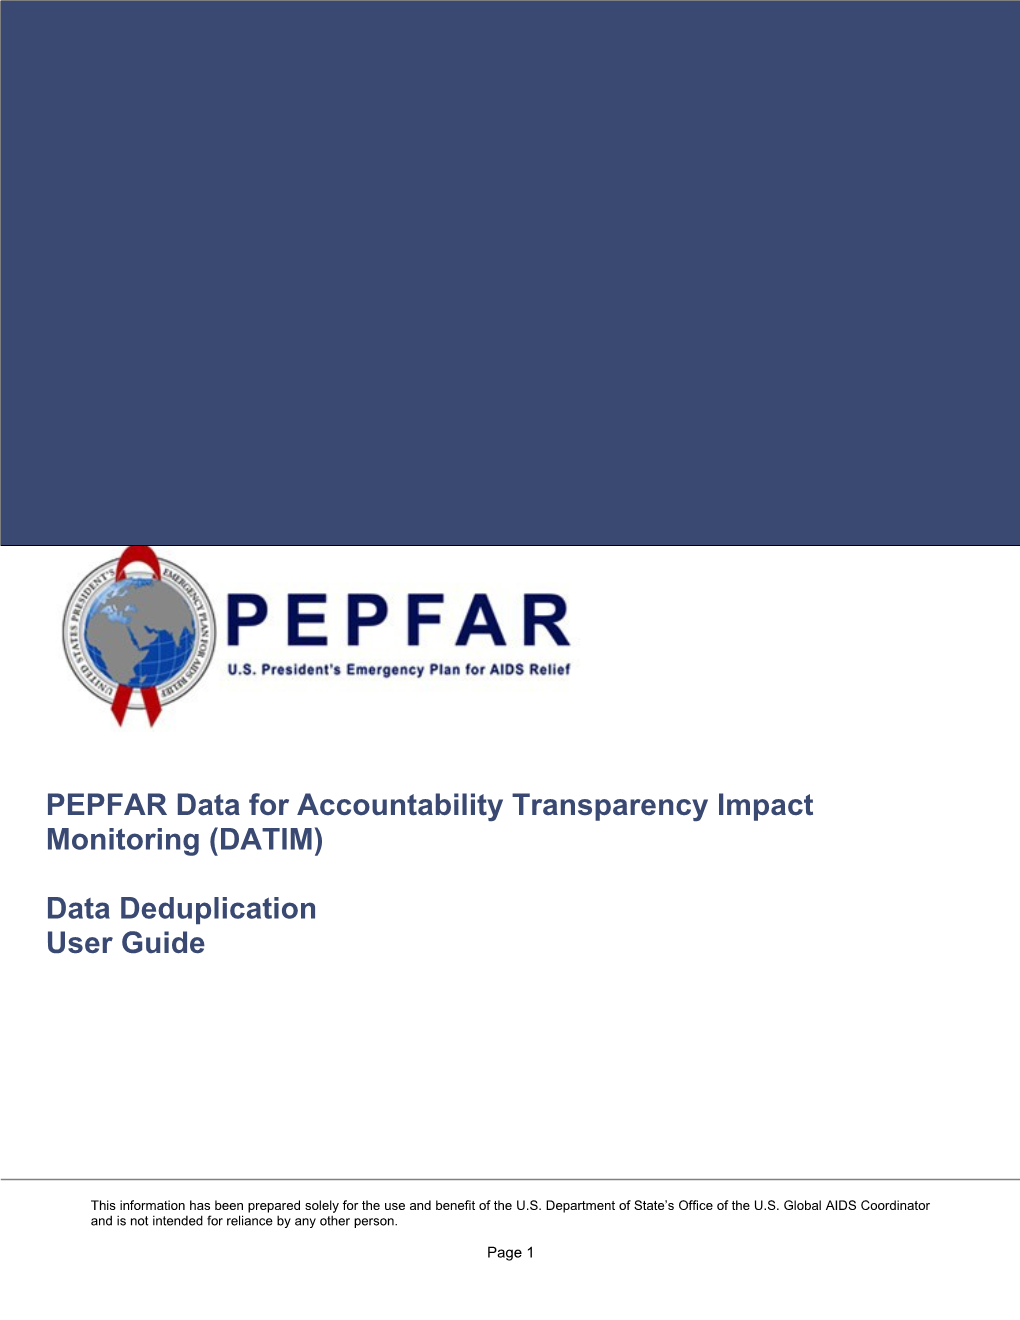 PEPFAR Data for Accountability Transparency Impact Monitoring (DATIM)